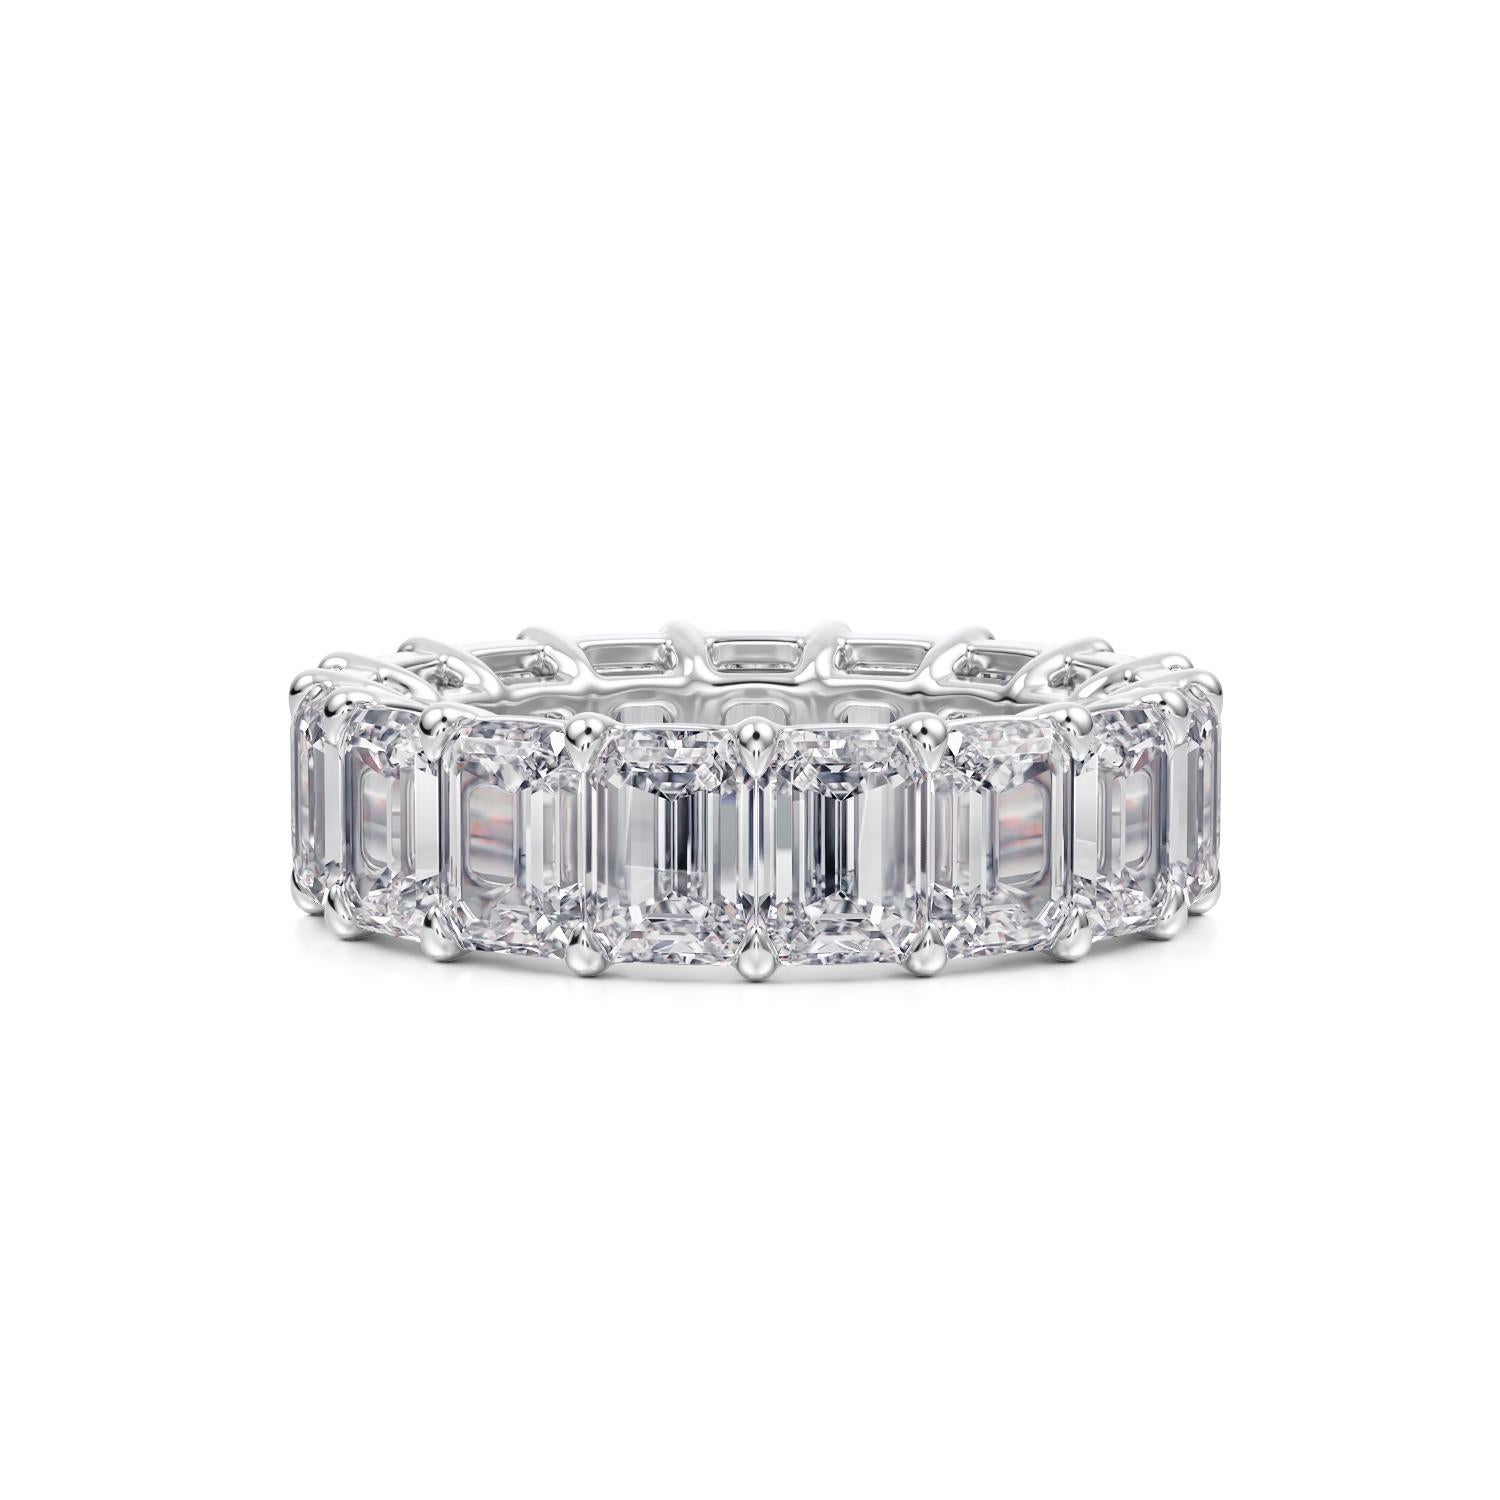 7.5 carat emerald cut diamond ring